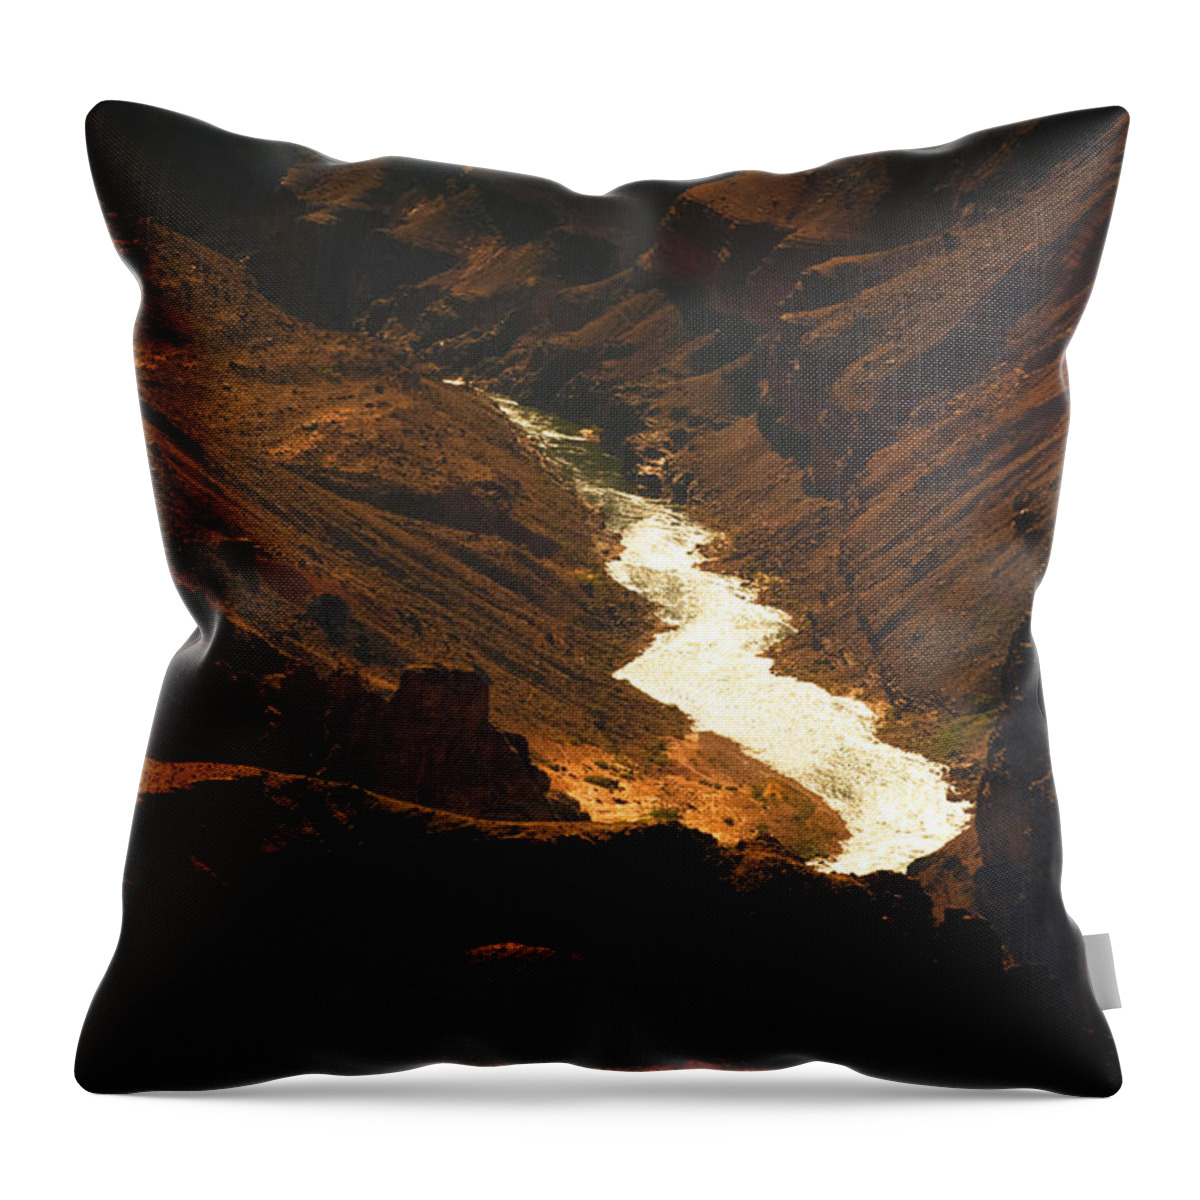 Colorado River Throw Pillow featuring the photograph Colorado River Rapids by Julie Niemela